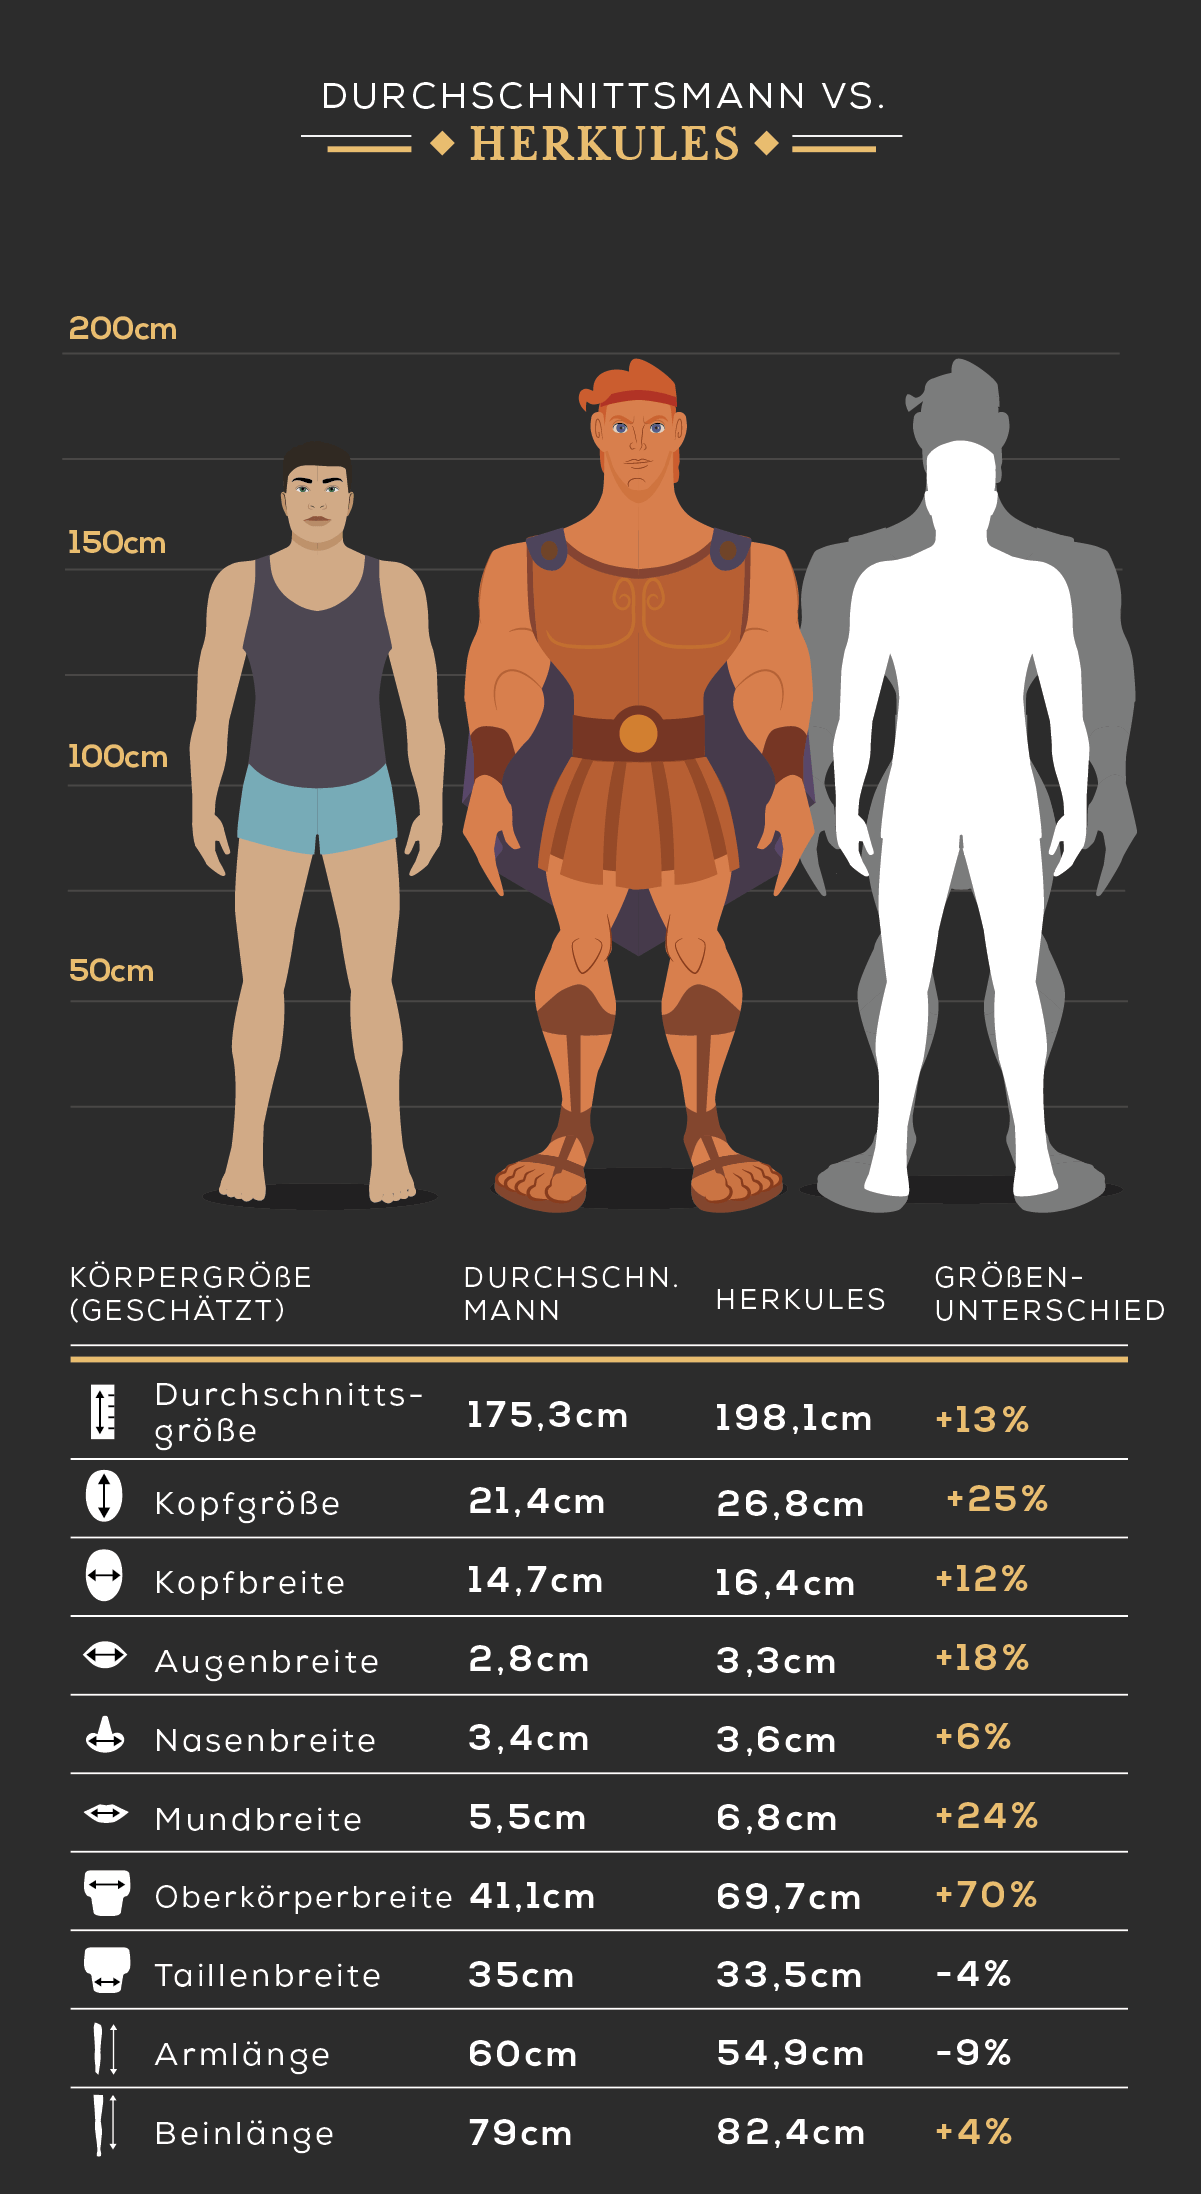 Körpergröße des Durchschnittsmann vs. Maui